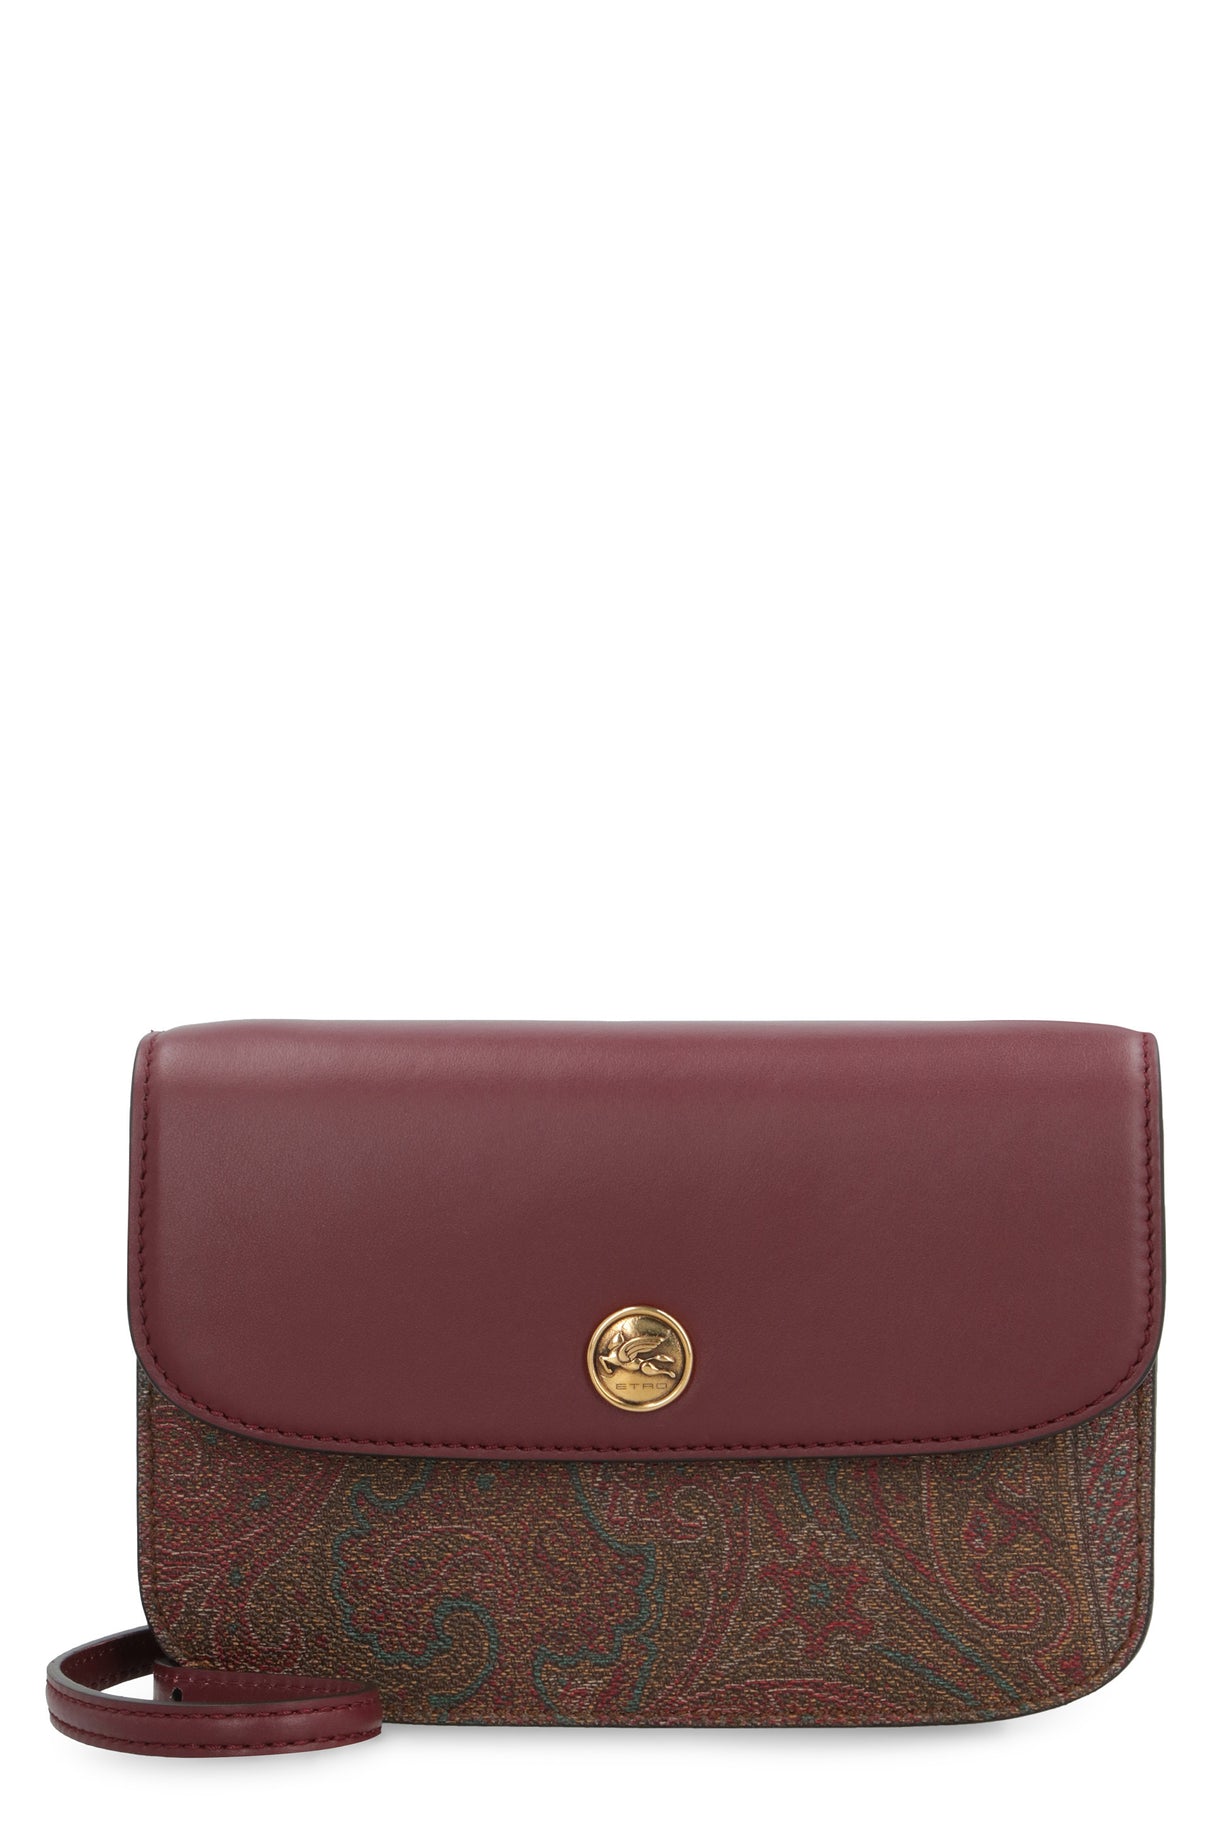 ETRO Paisley Print Crossbody Handbag - Coated Jacquard Fabric with Leather Details